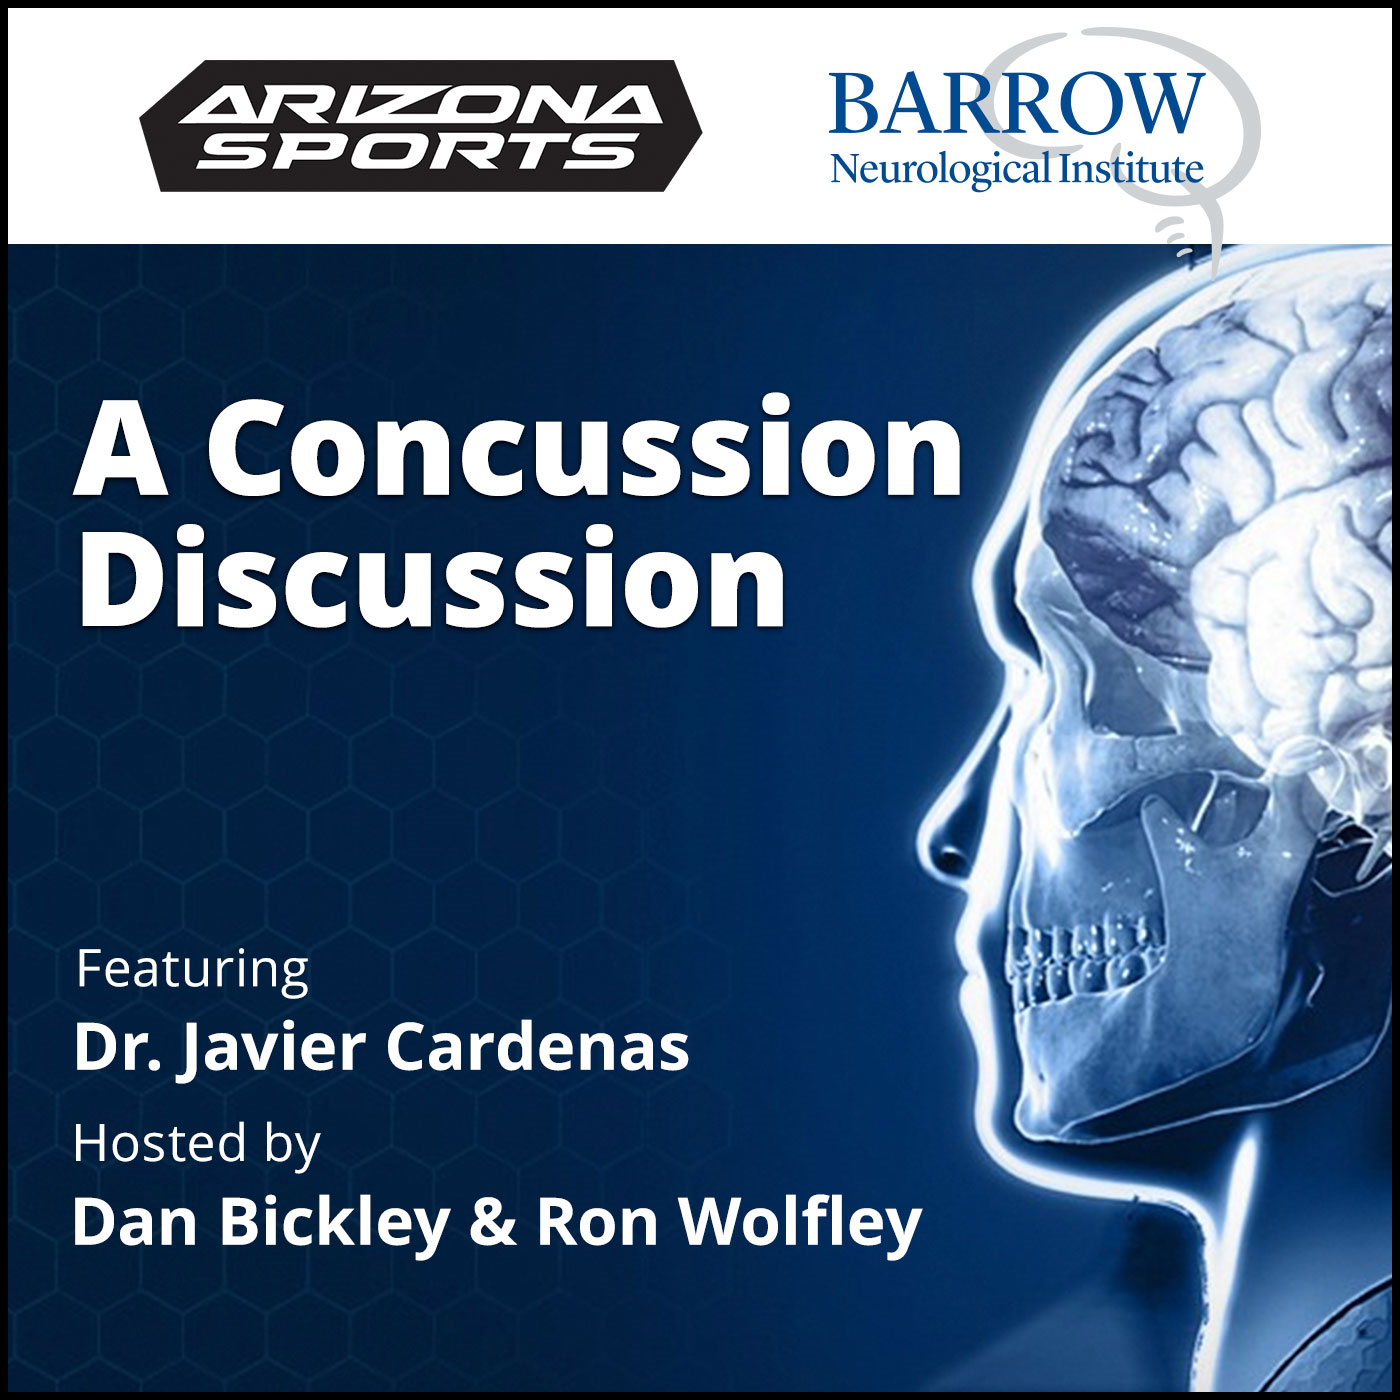 The Concussion Discussion